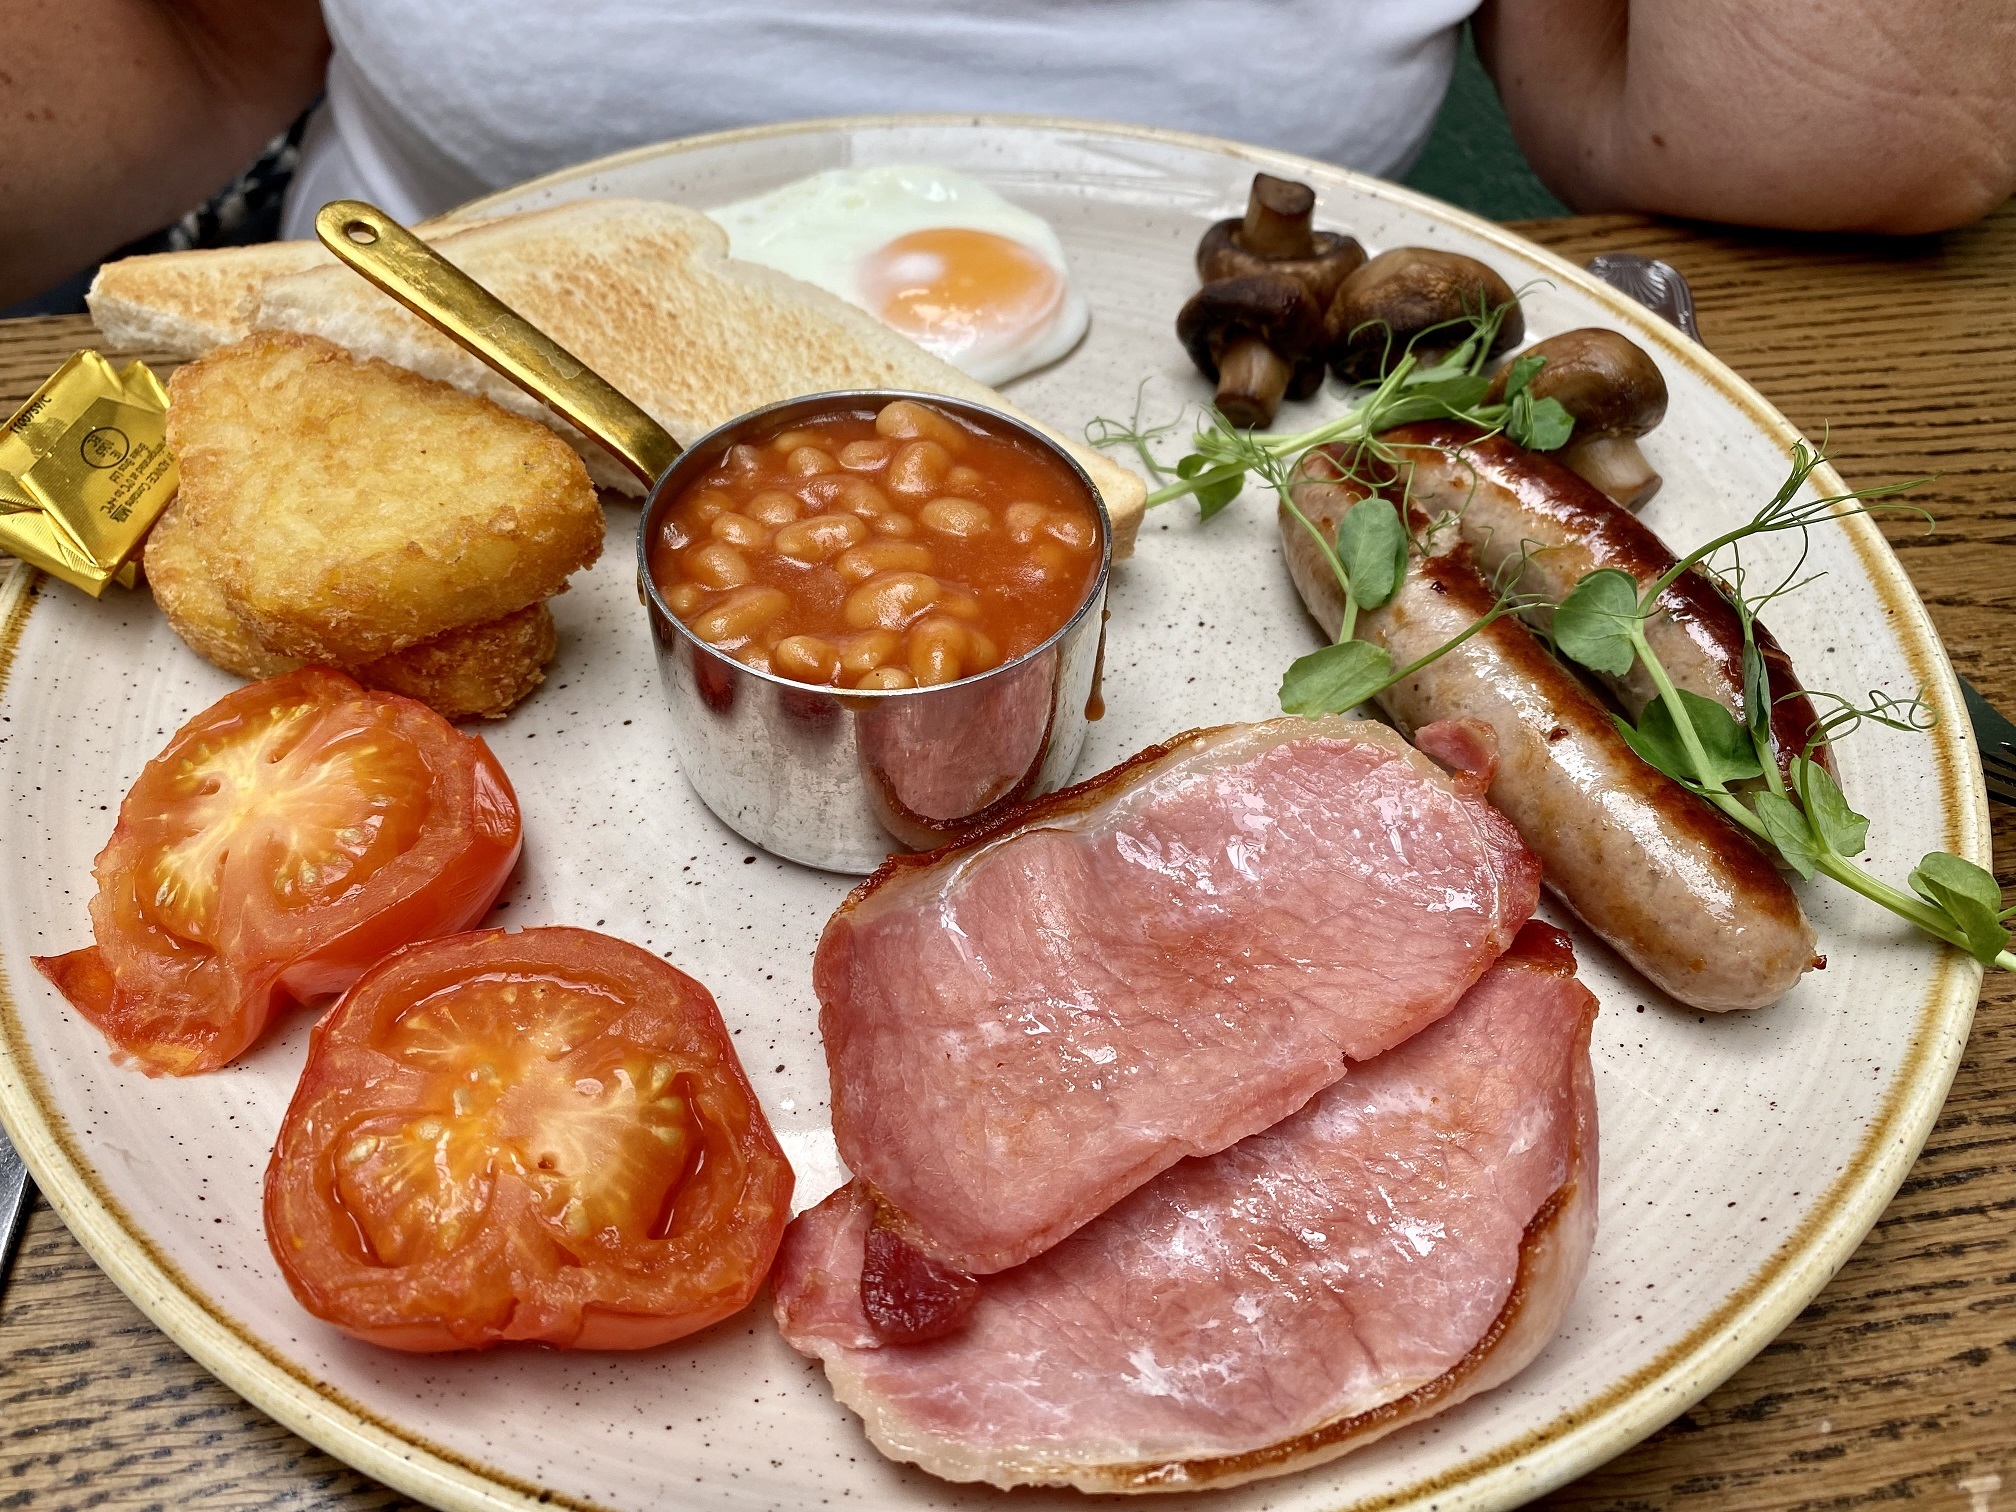 The full English, or Gardeners breakfast